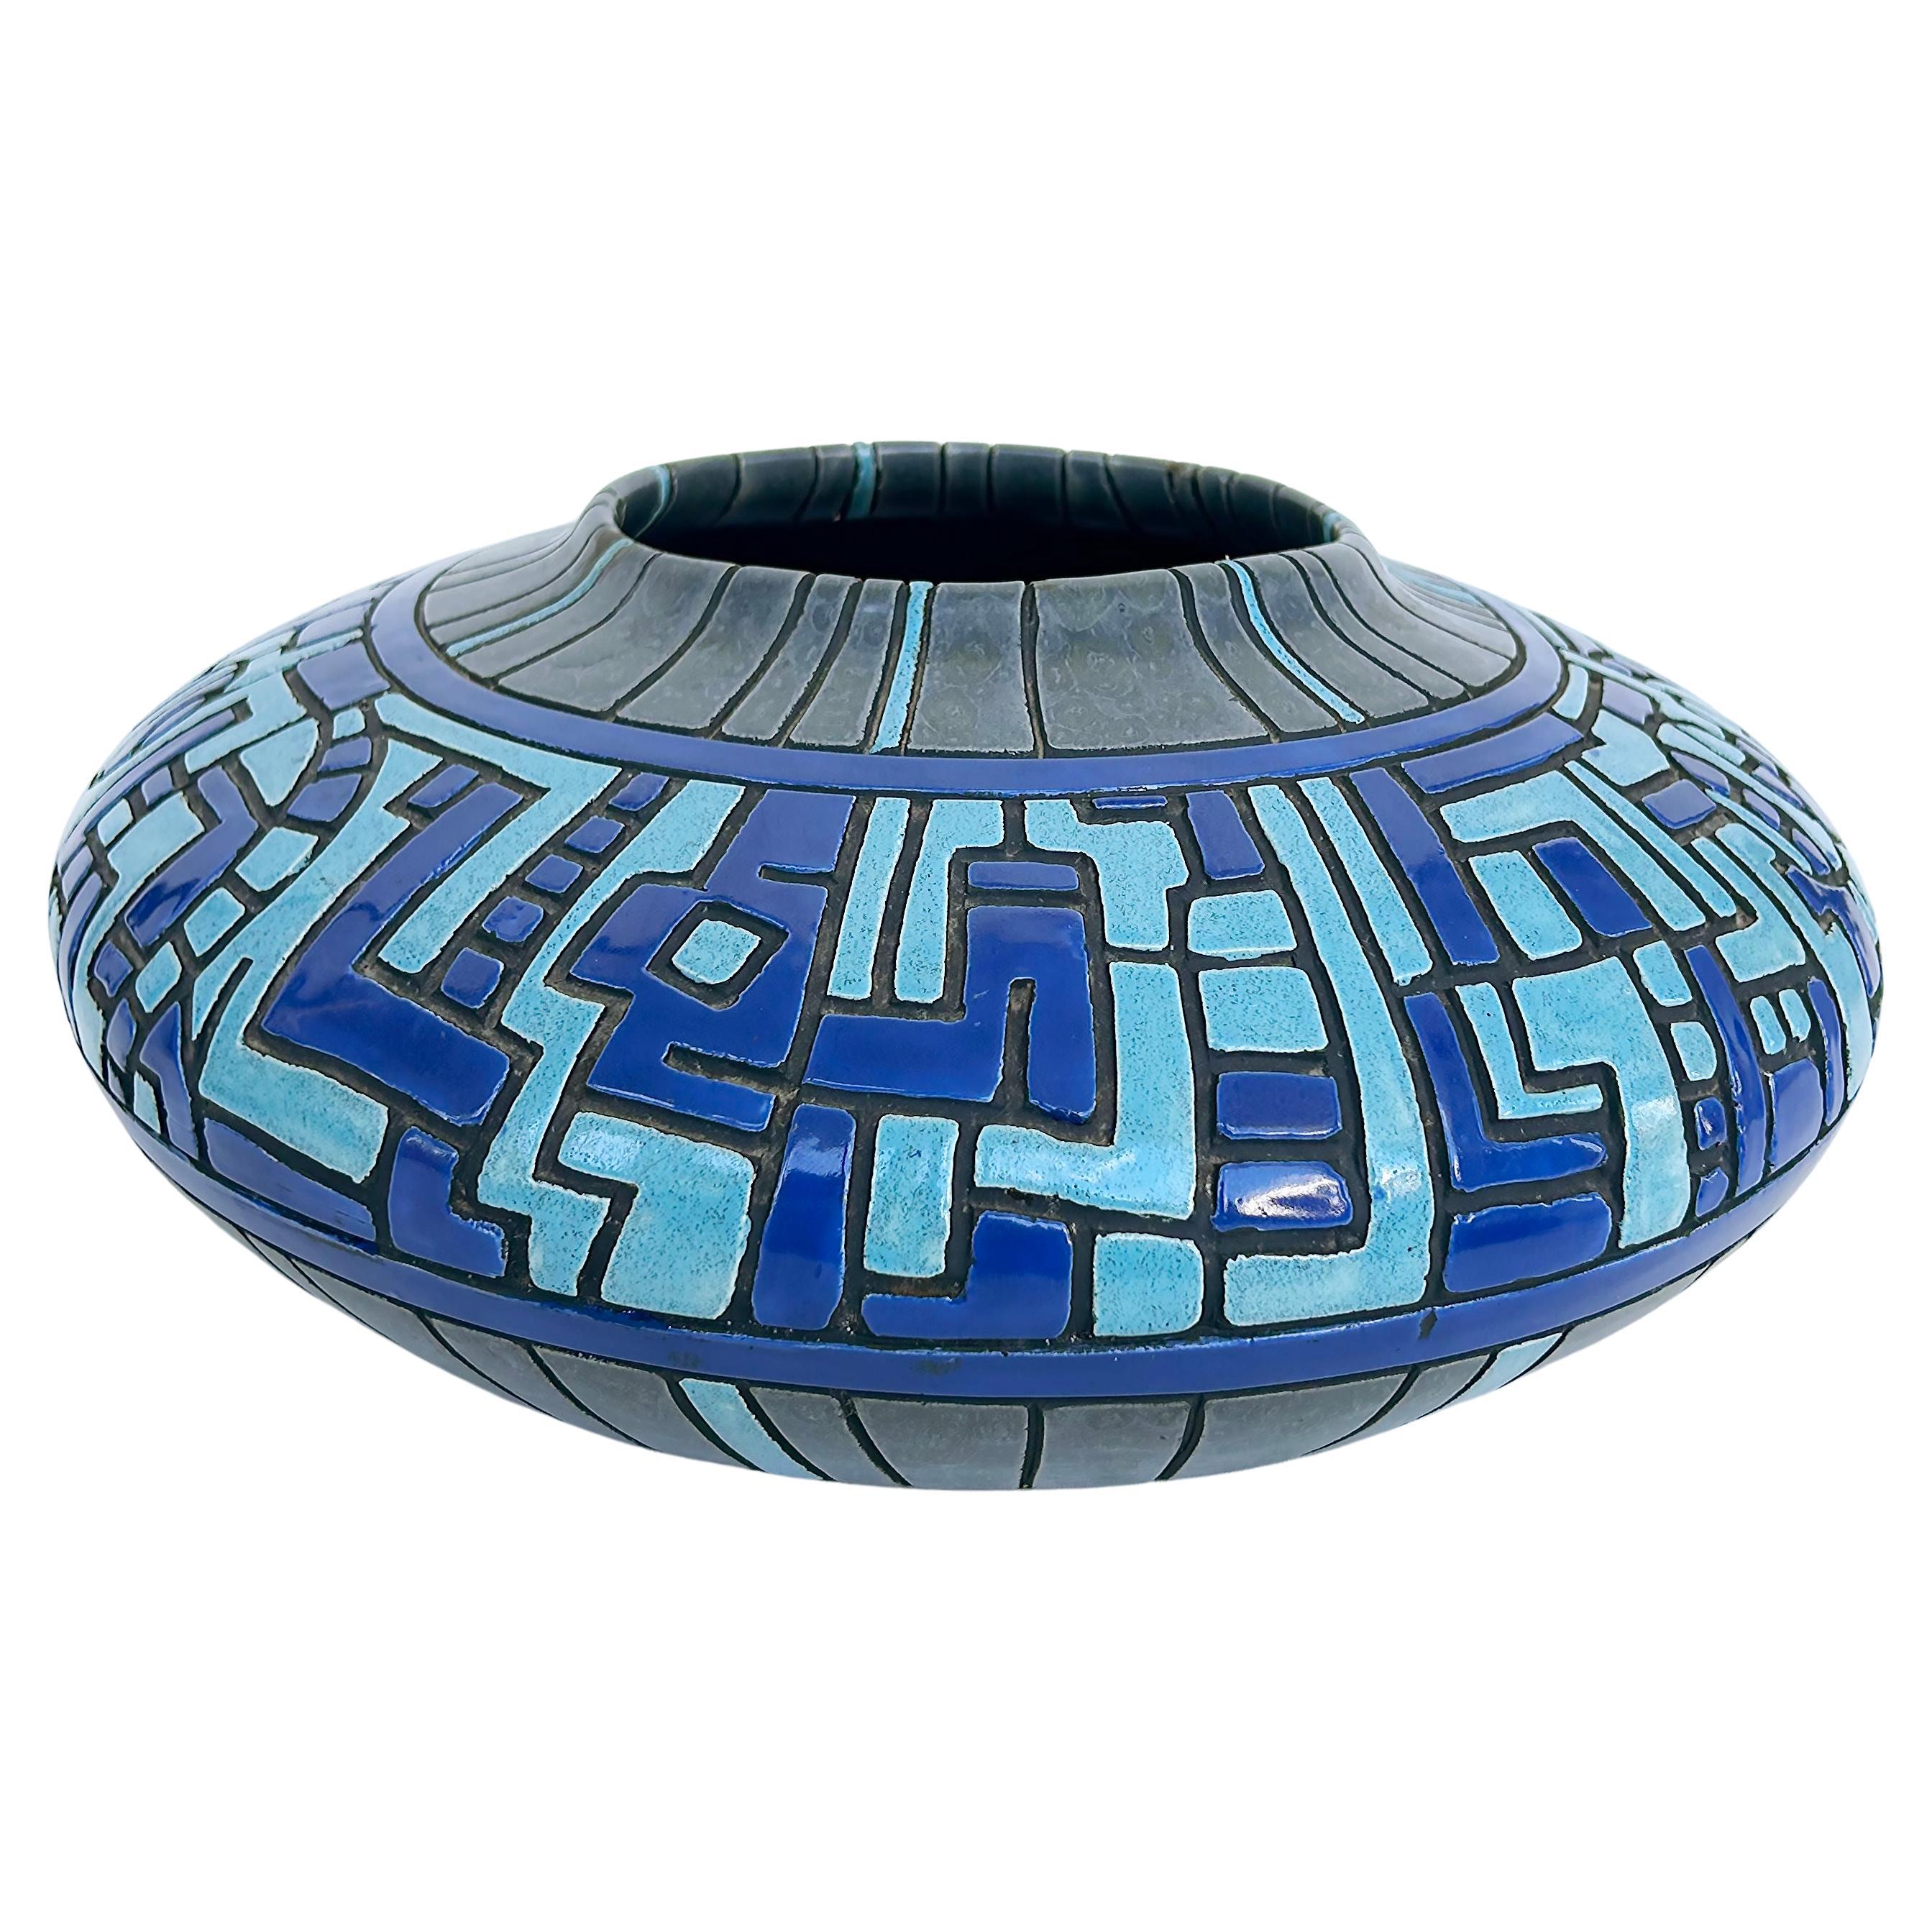 Vintage Modernist Ceramic Centerpiece Geometric Bowl, Signed 